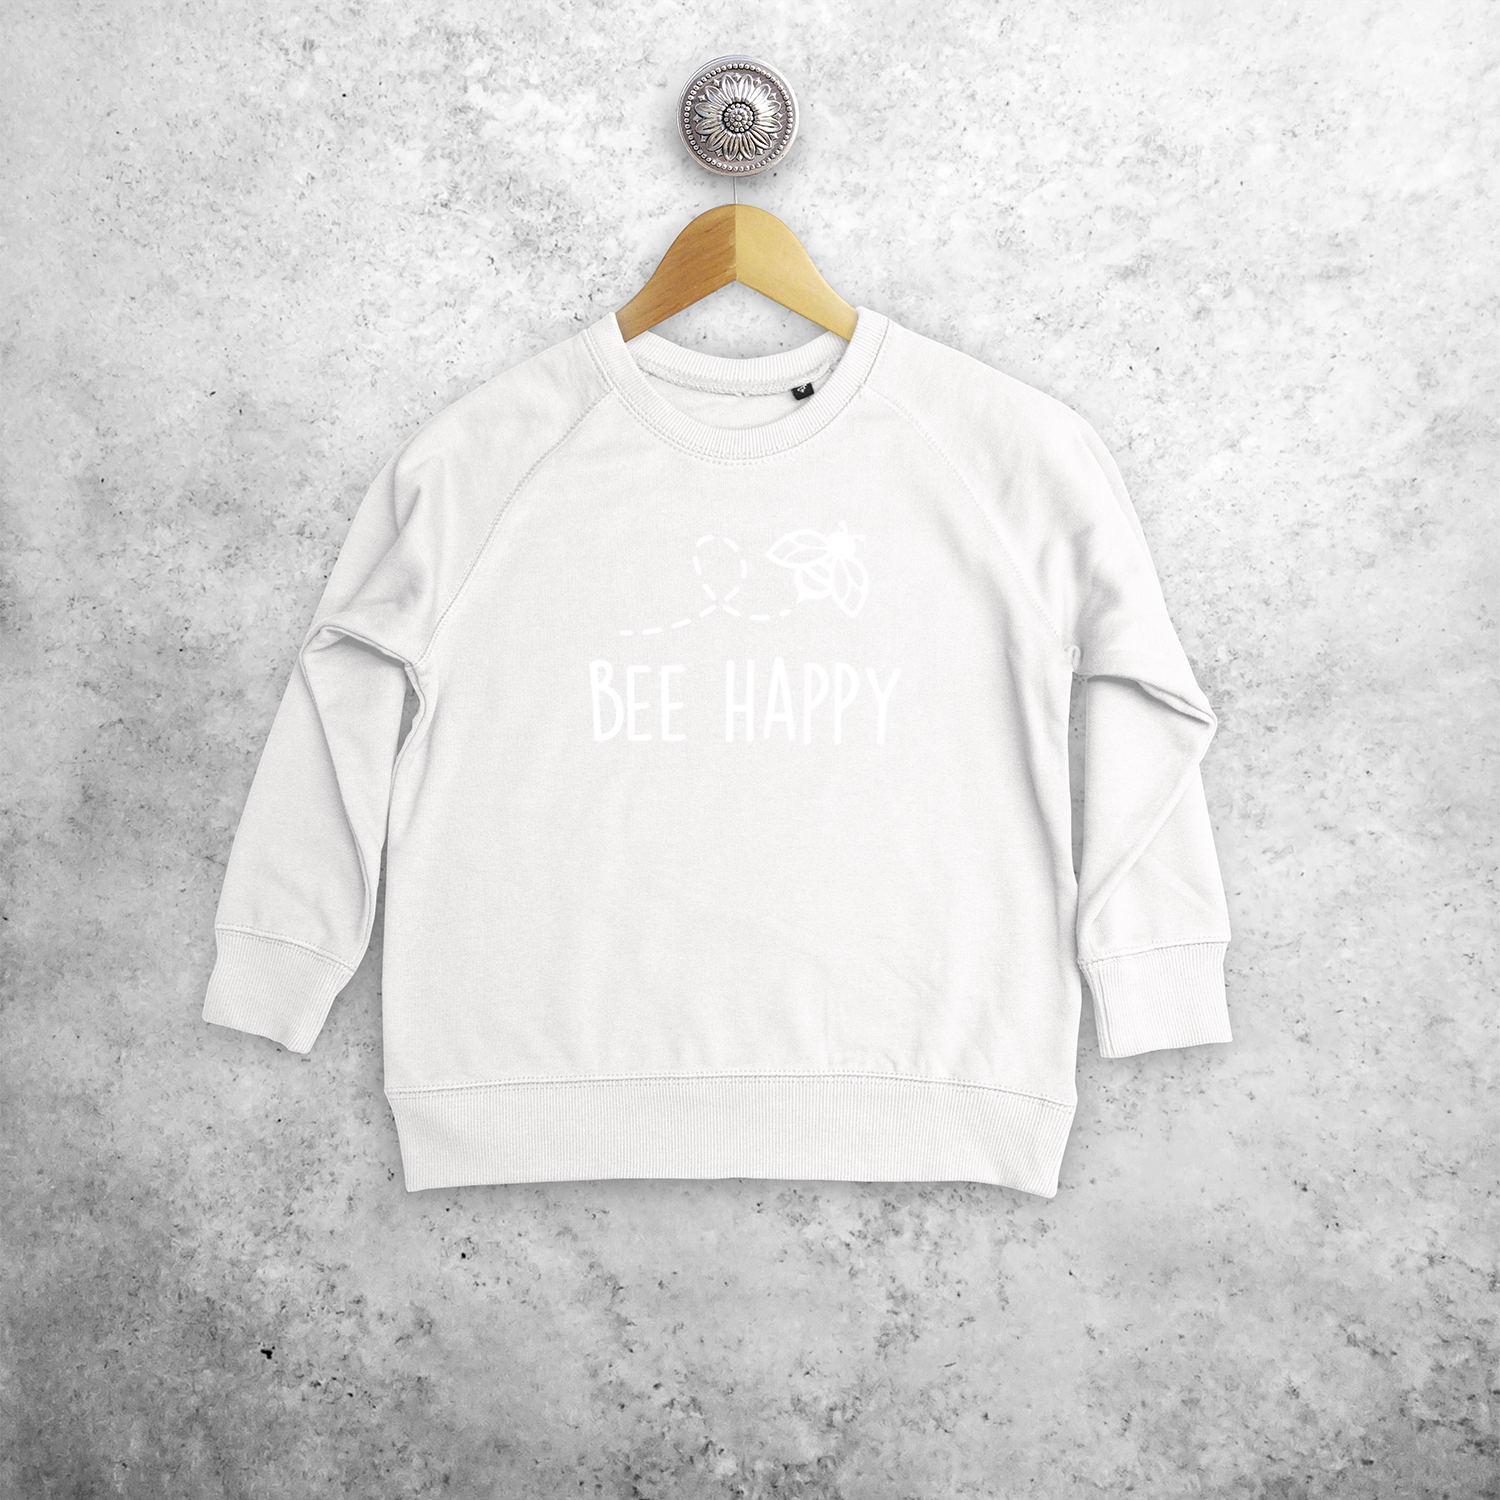 'Bee happy' magic kids sweater